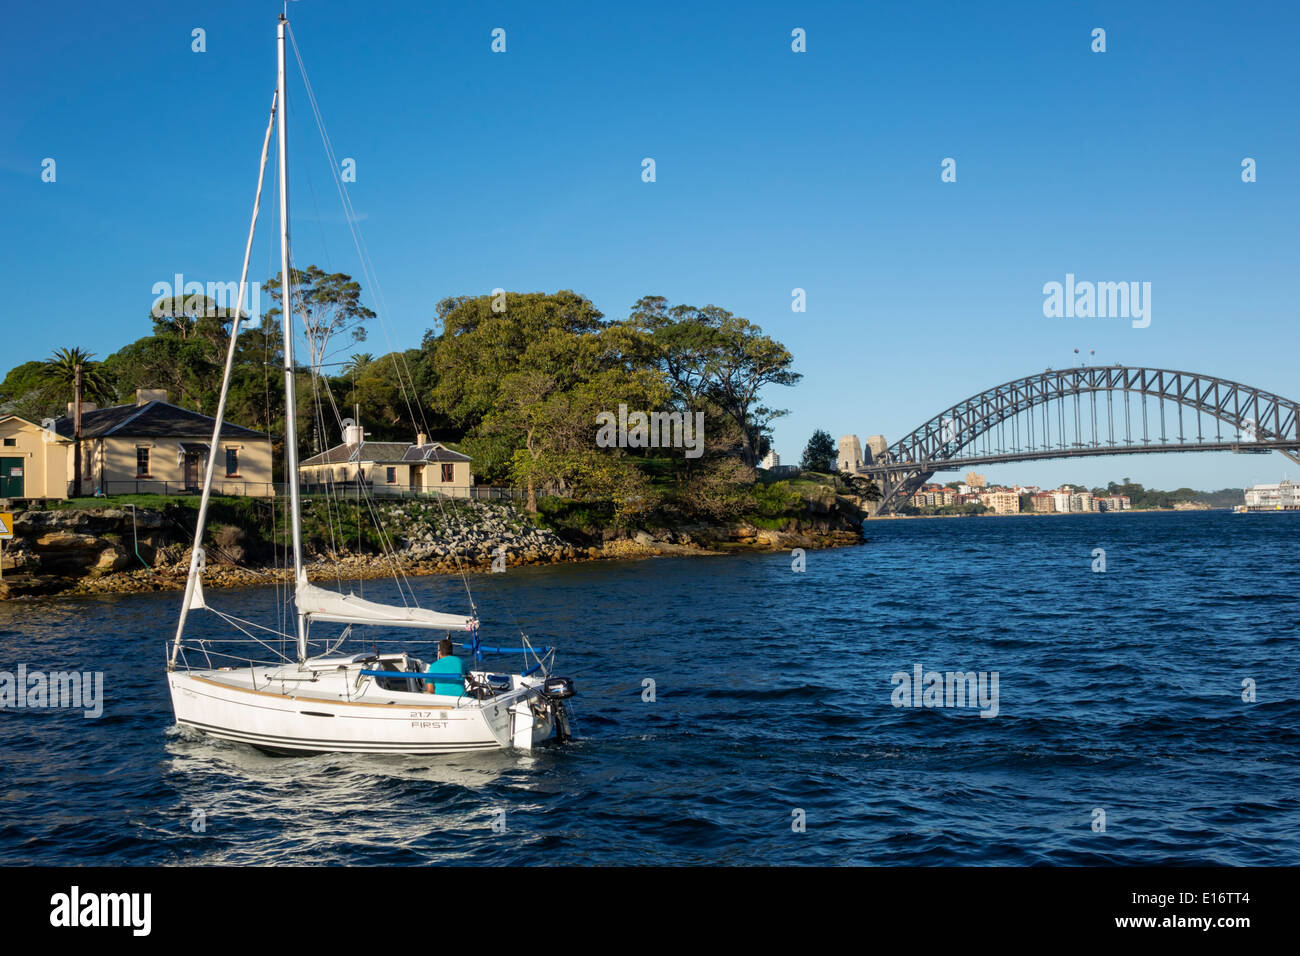 Sydney Australia,nuovo Galles del Sud,Porto,porto,Ponte,acqua,Balmain Est,barca,barca a vela,visitatori viaggio viaggio turistico turismo Landma Foto Stock